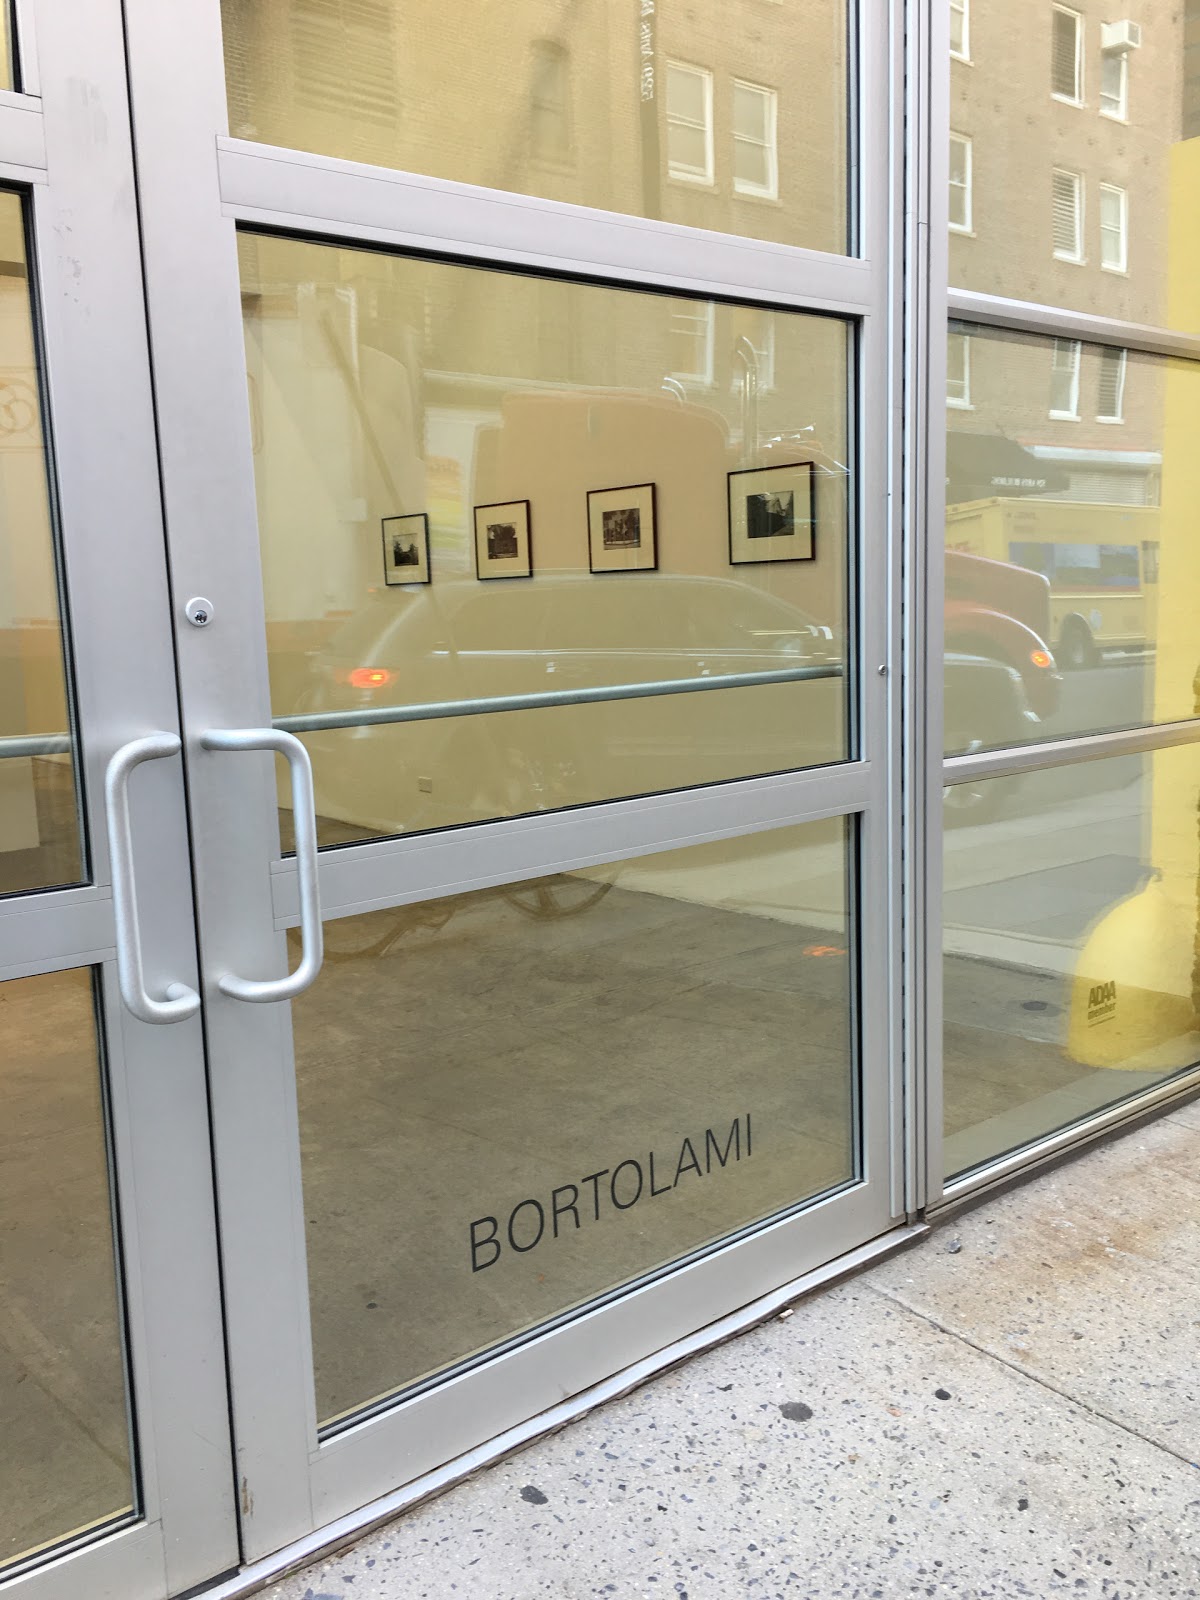 Photo of Bortolami Llc in New York City, New York, United States - 1 Picture of Point of interest, Establishment, Art gallery